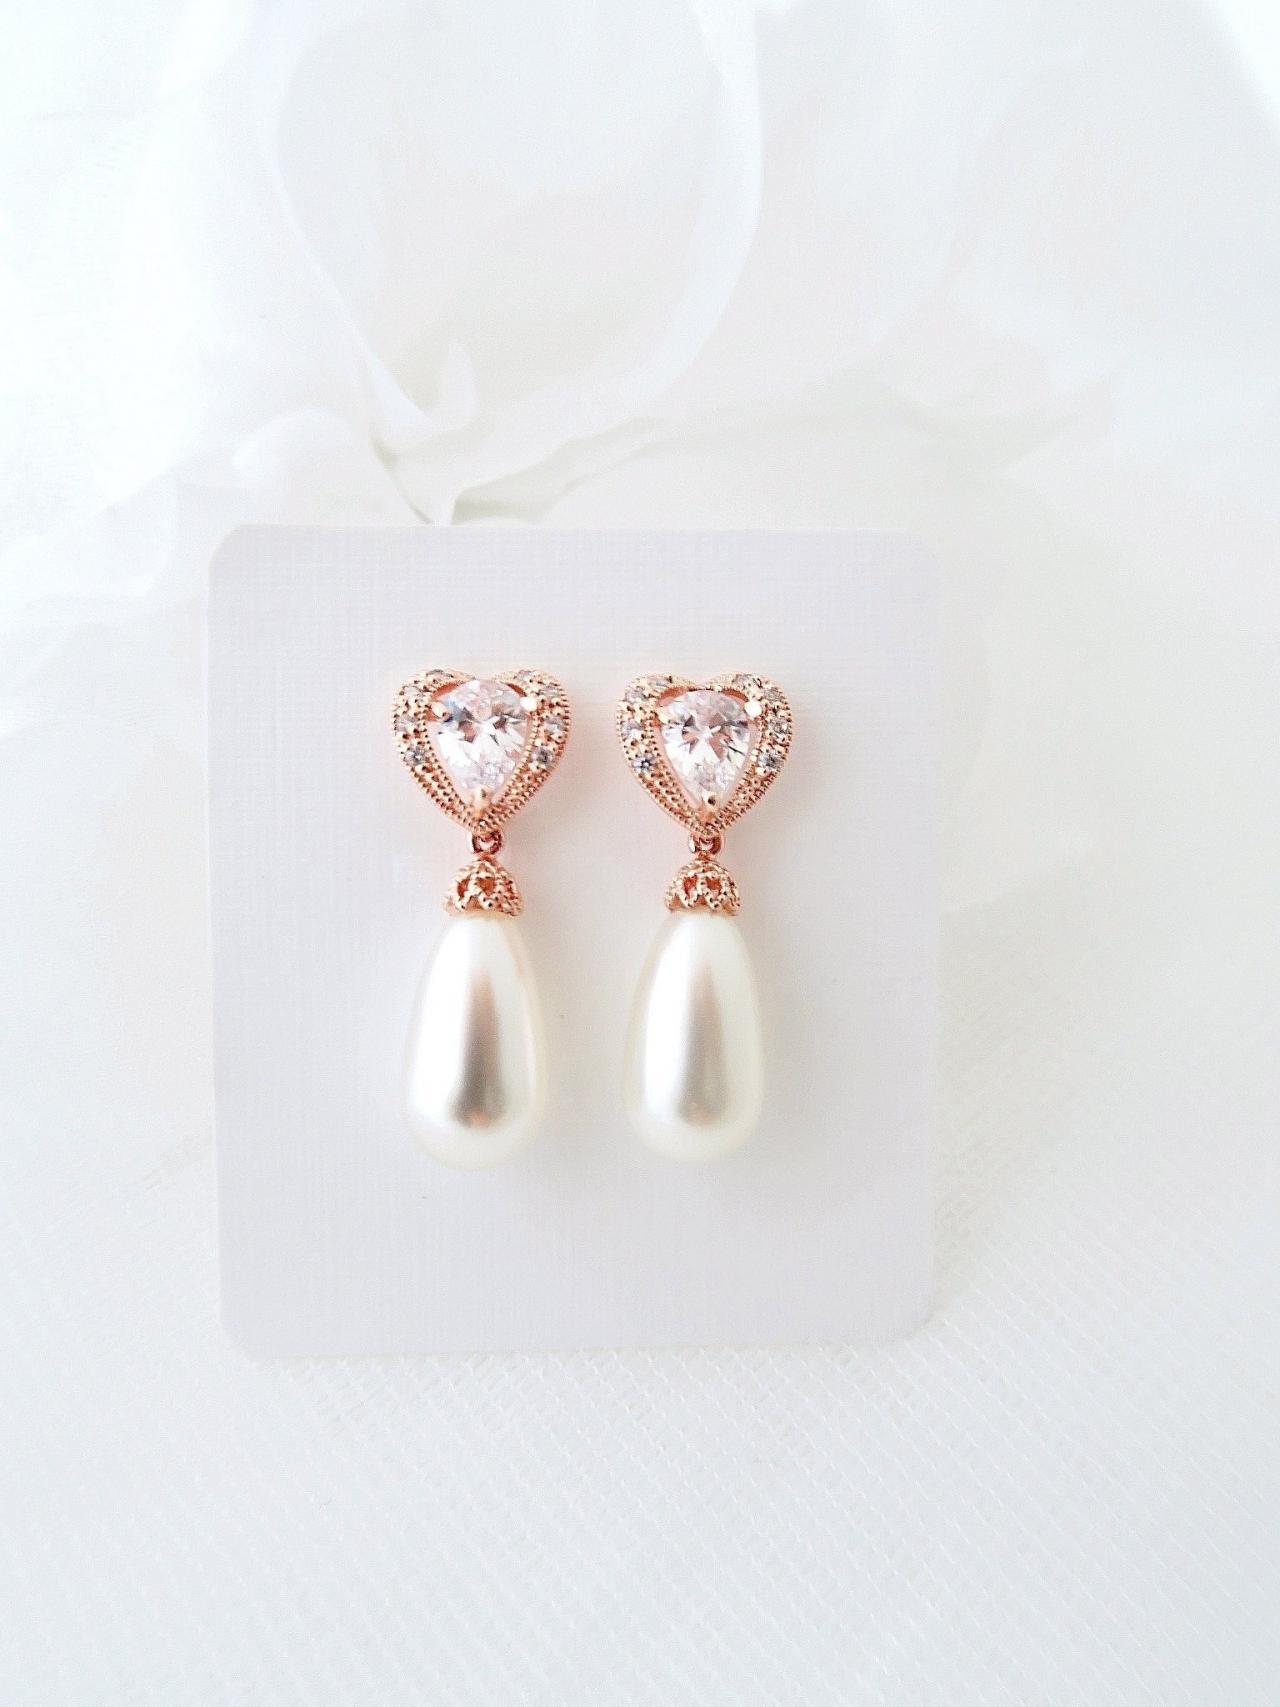 Rose Gold Bridal Pearl Earrings Wedding Earrings Swarovski Teardrop Pearl Heart-shaped Cubic Zirconia Earrings Bridesmaid Gift (e140)